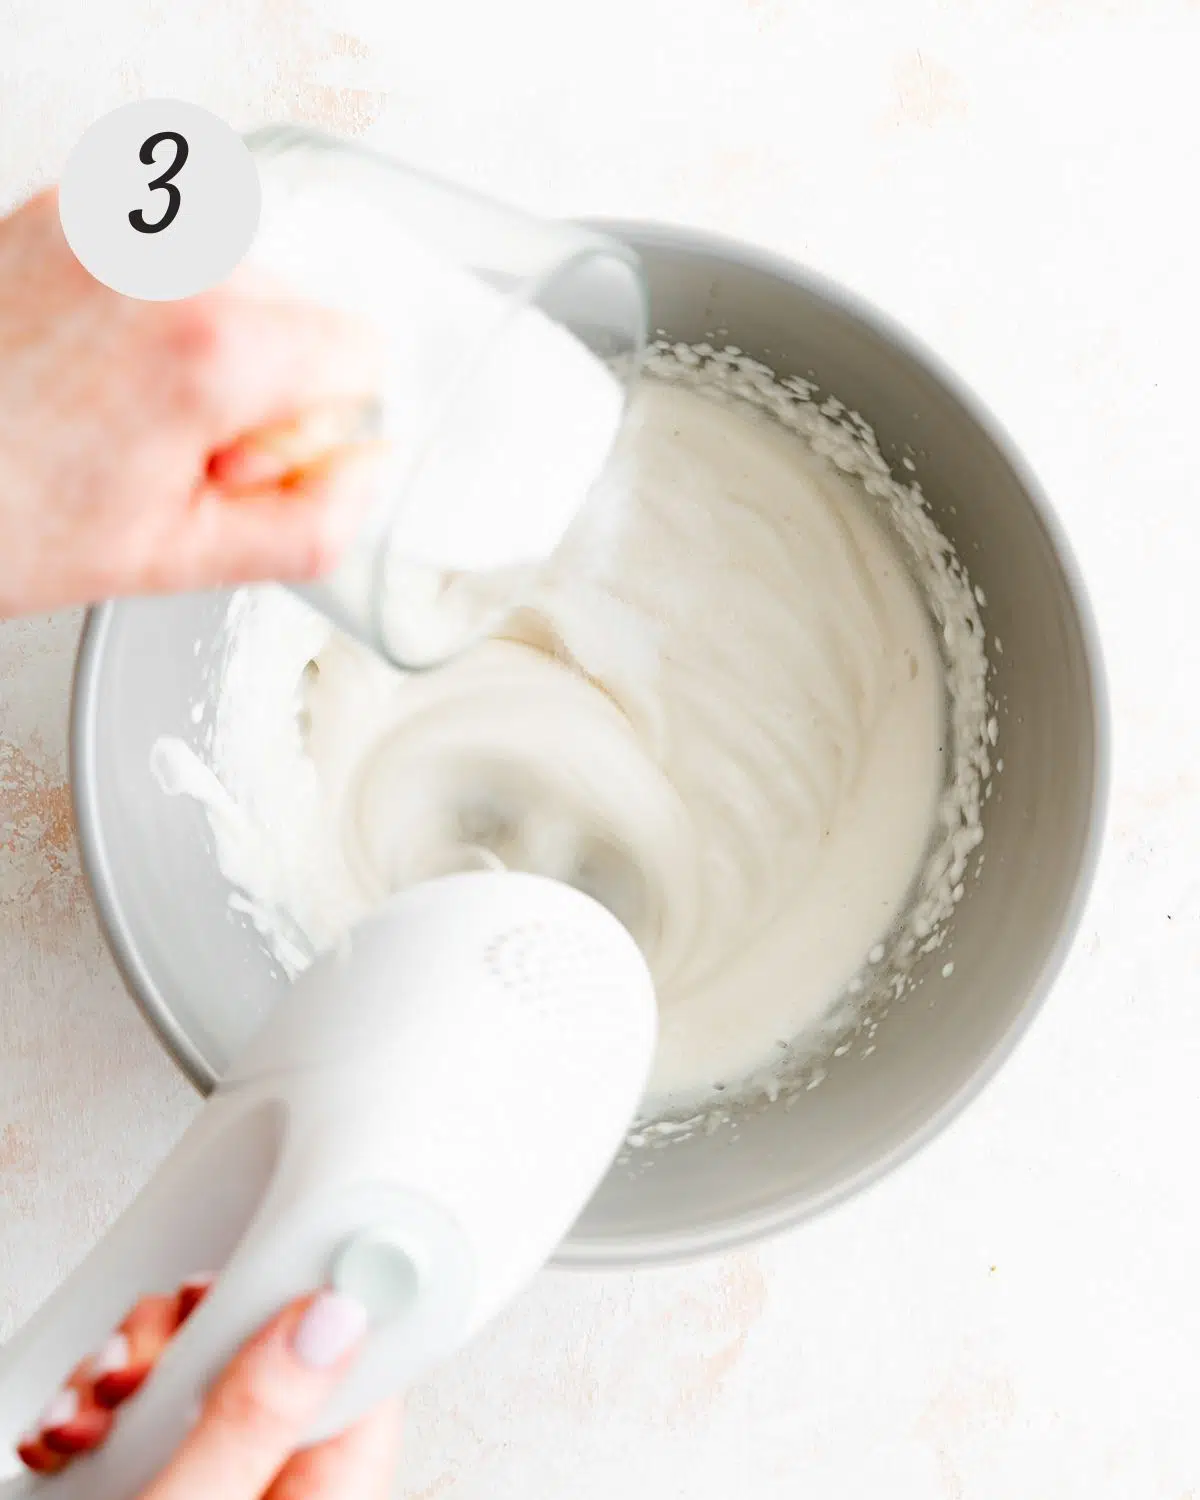 instructions on how to make vegan meringue.